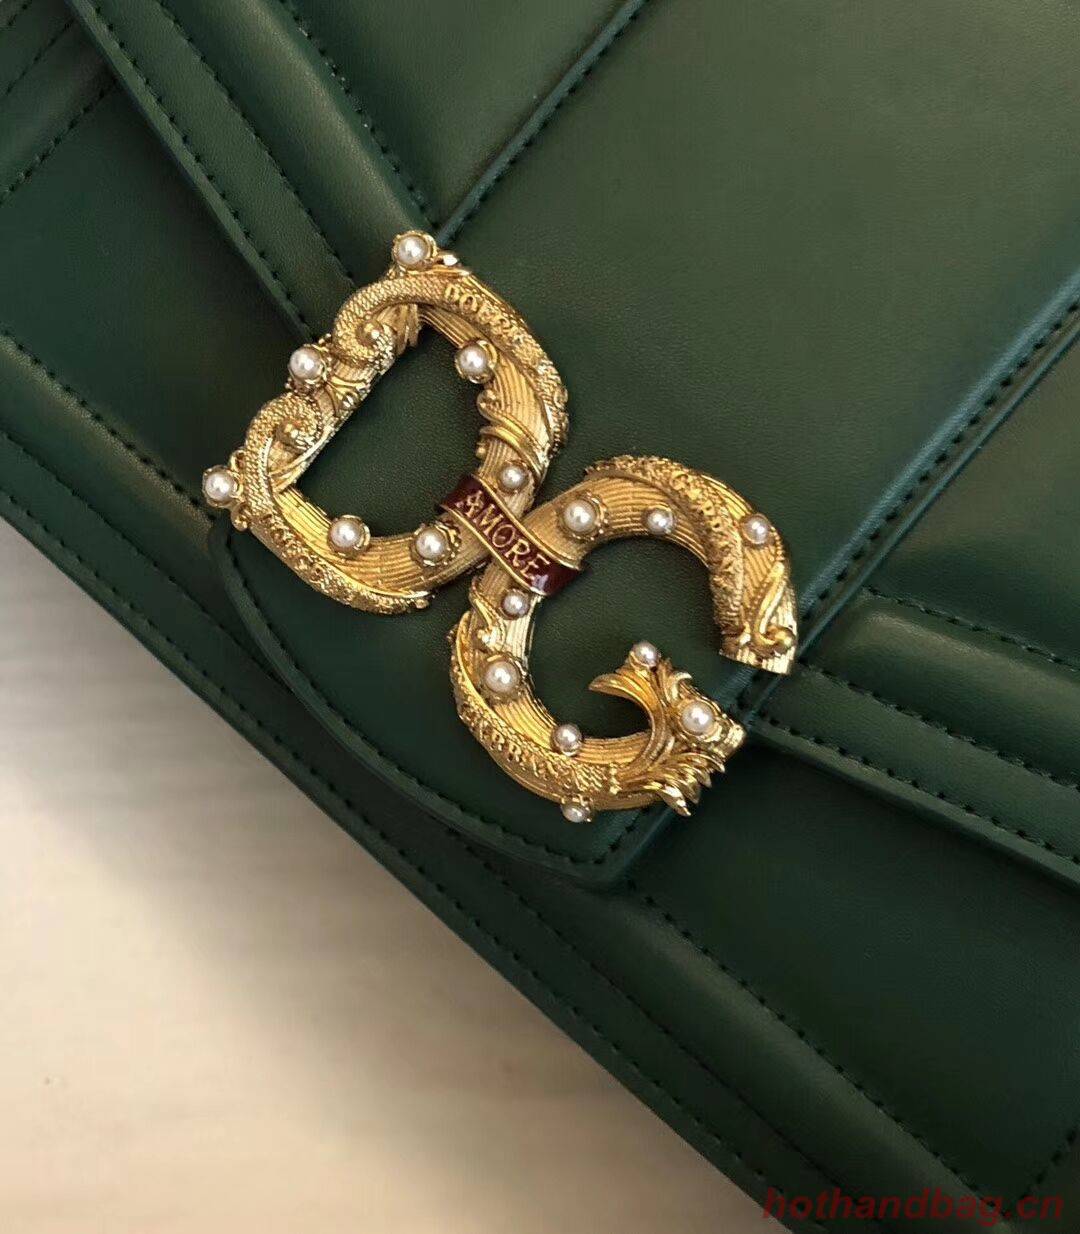 Dolce & Gabbana Origianl Leather Bag 4916 Green